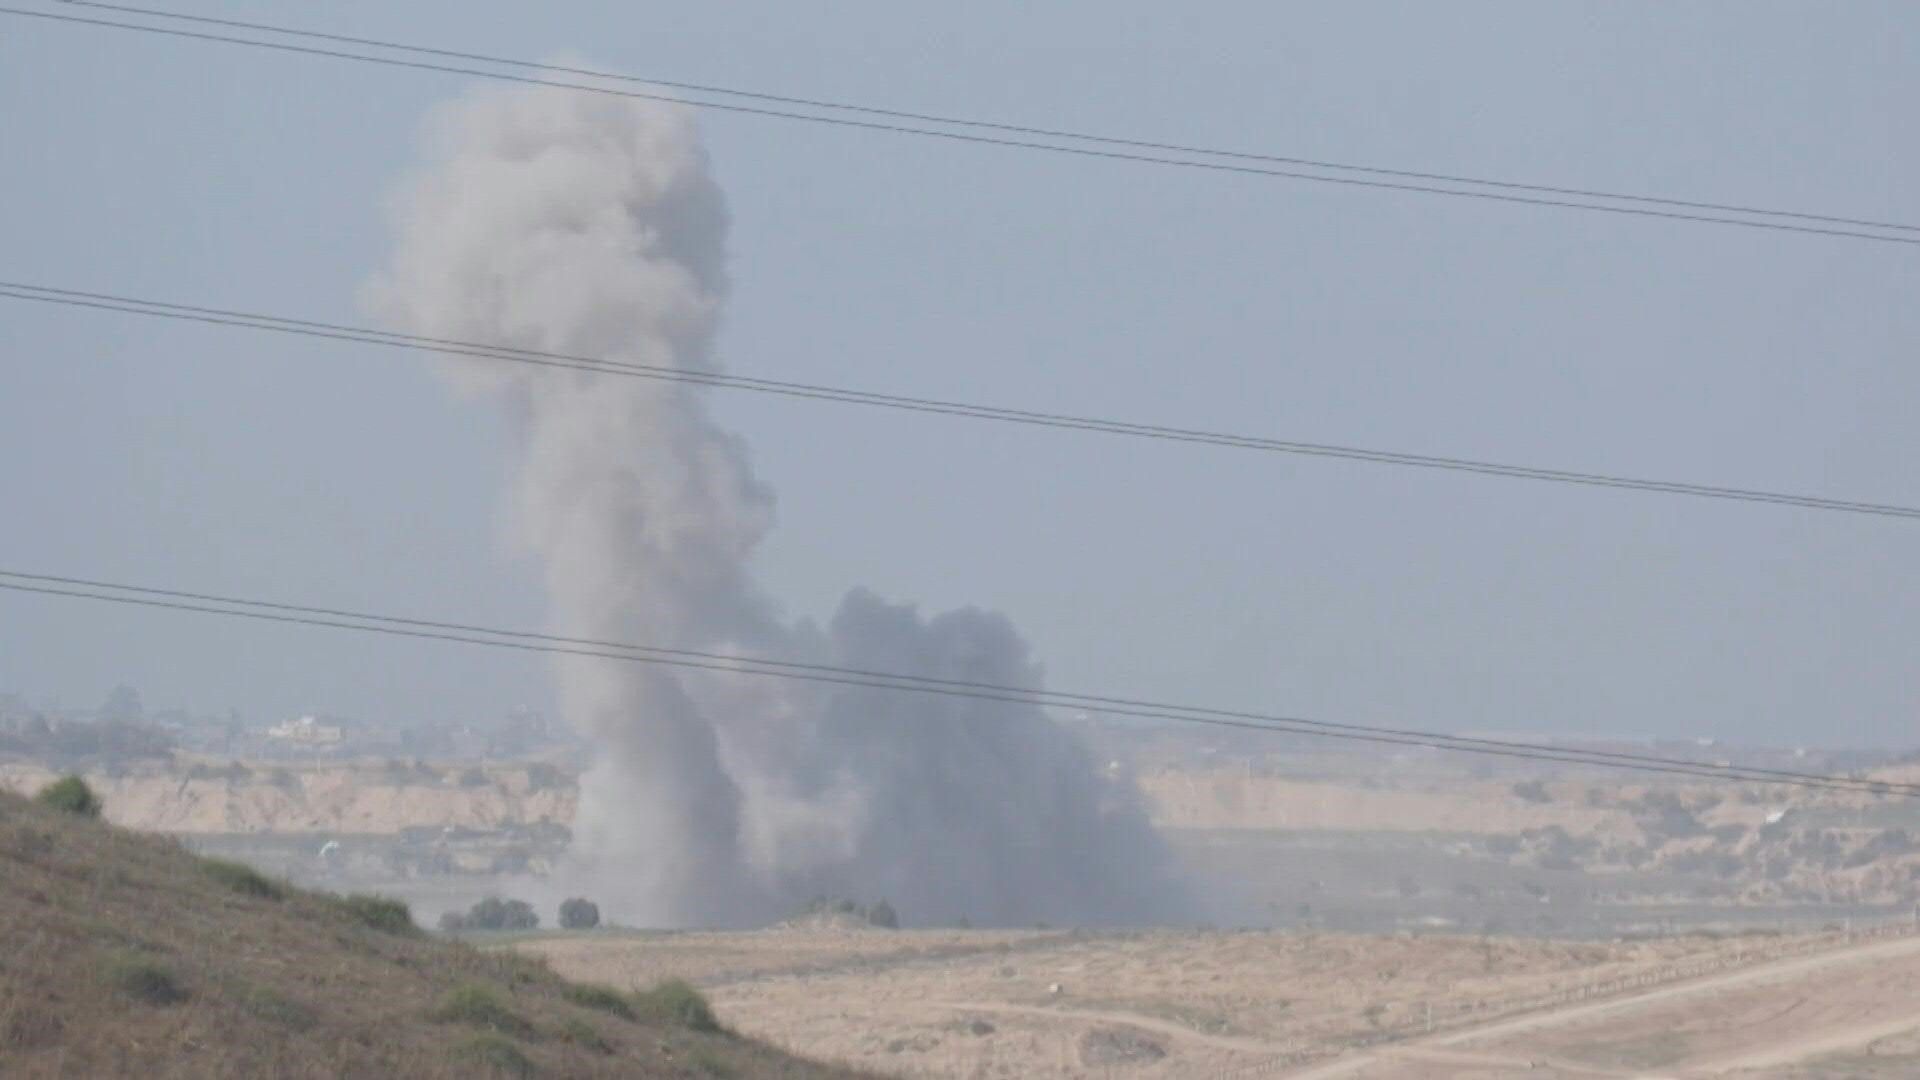 Israeli tanks on Gaza-Israel border as smoke rises after strikes